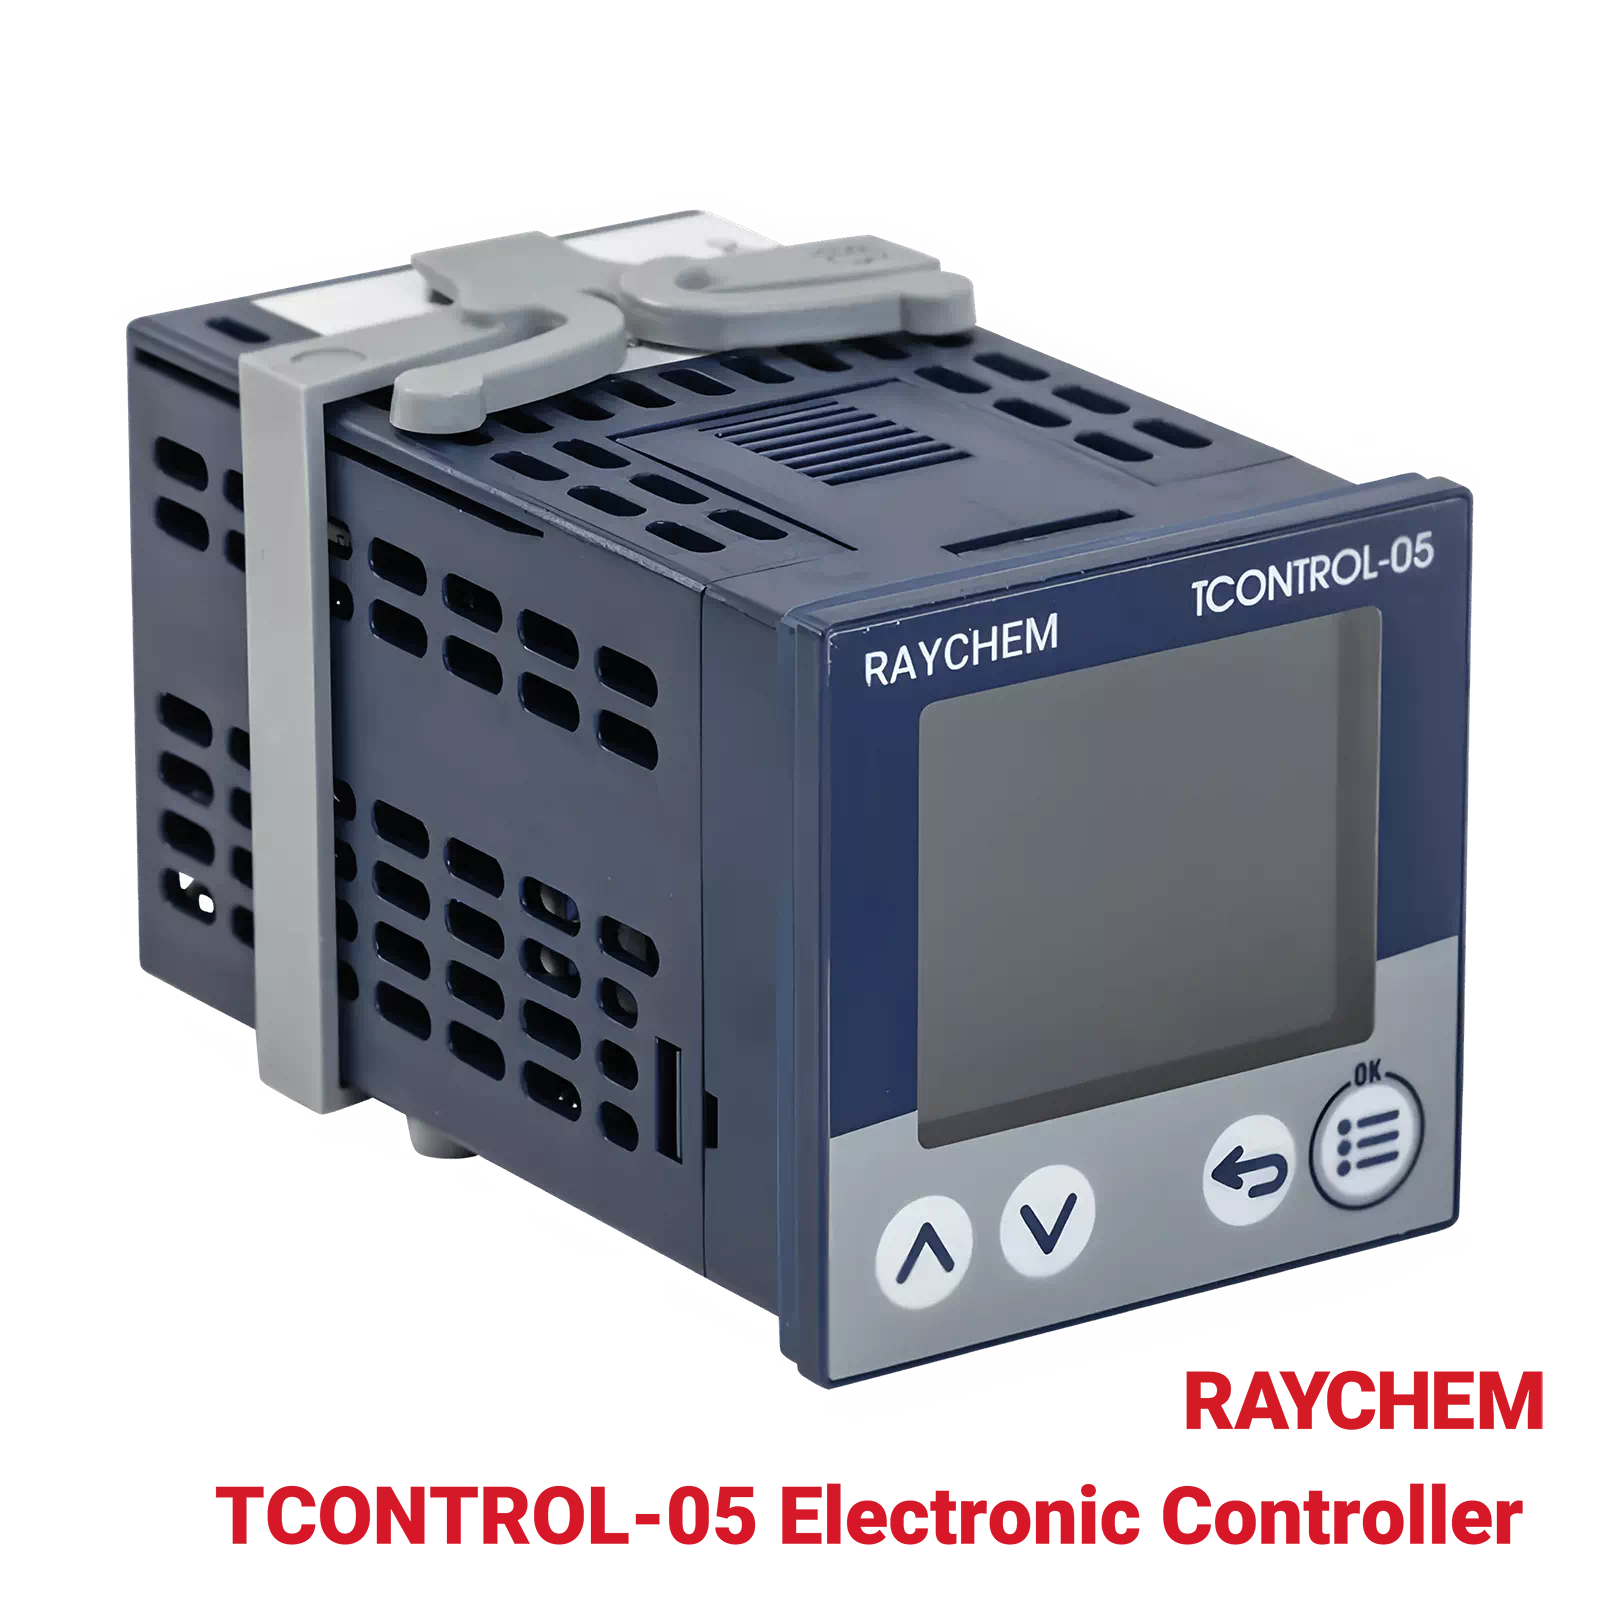 TCONTROL-05-Electronic-Controller-Raychem-Industrial-Heating